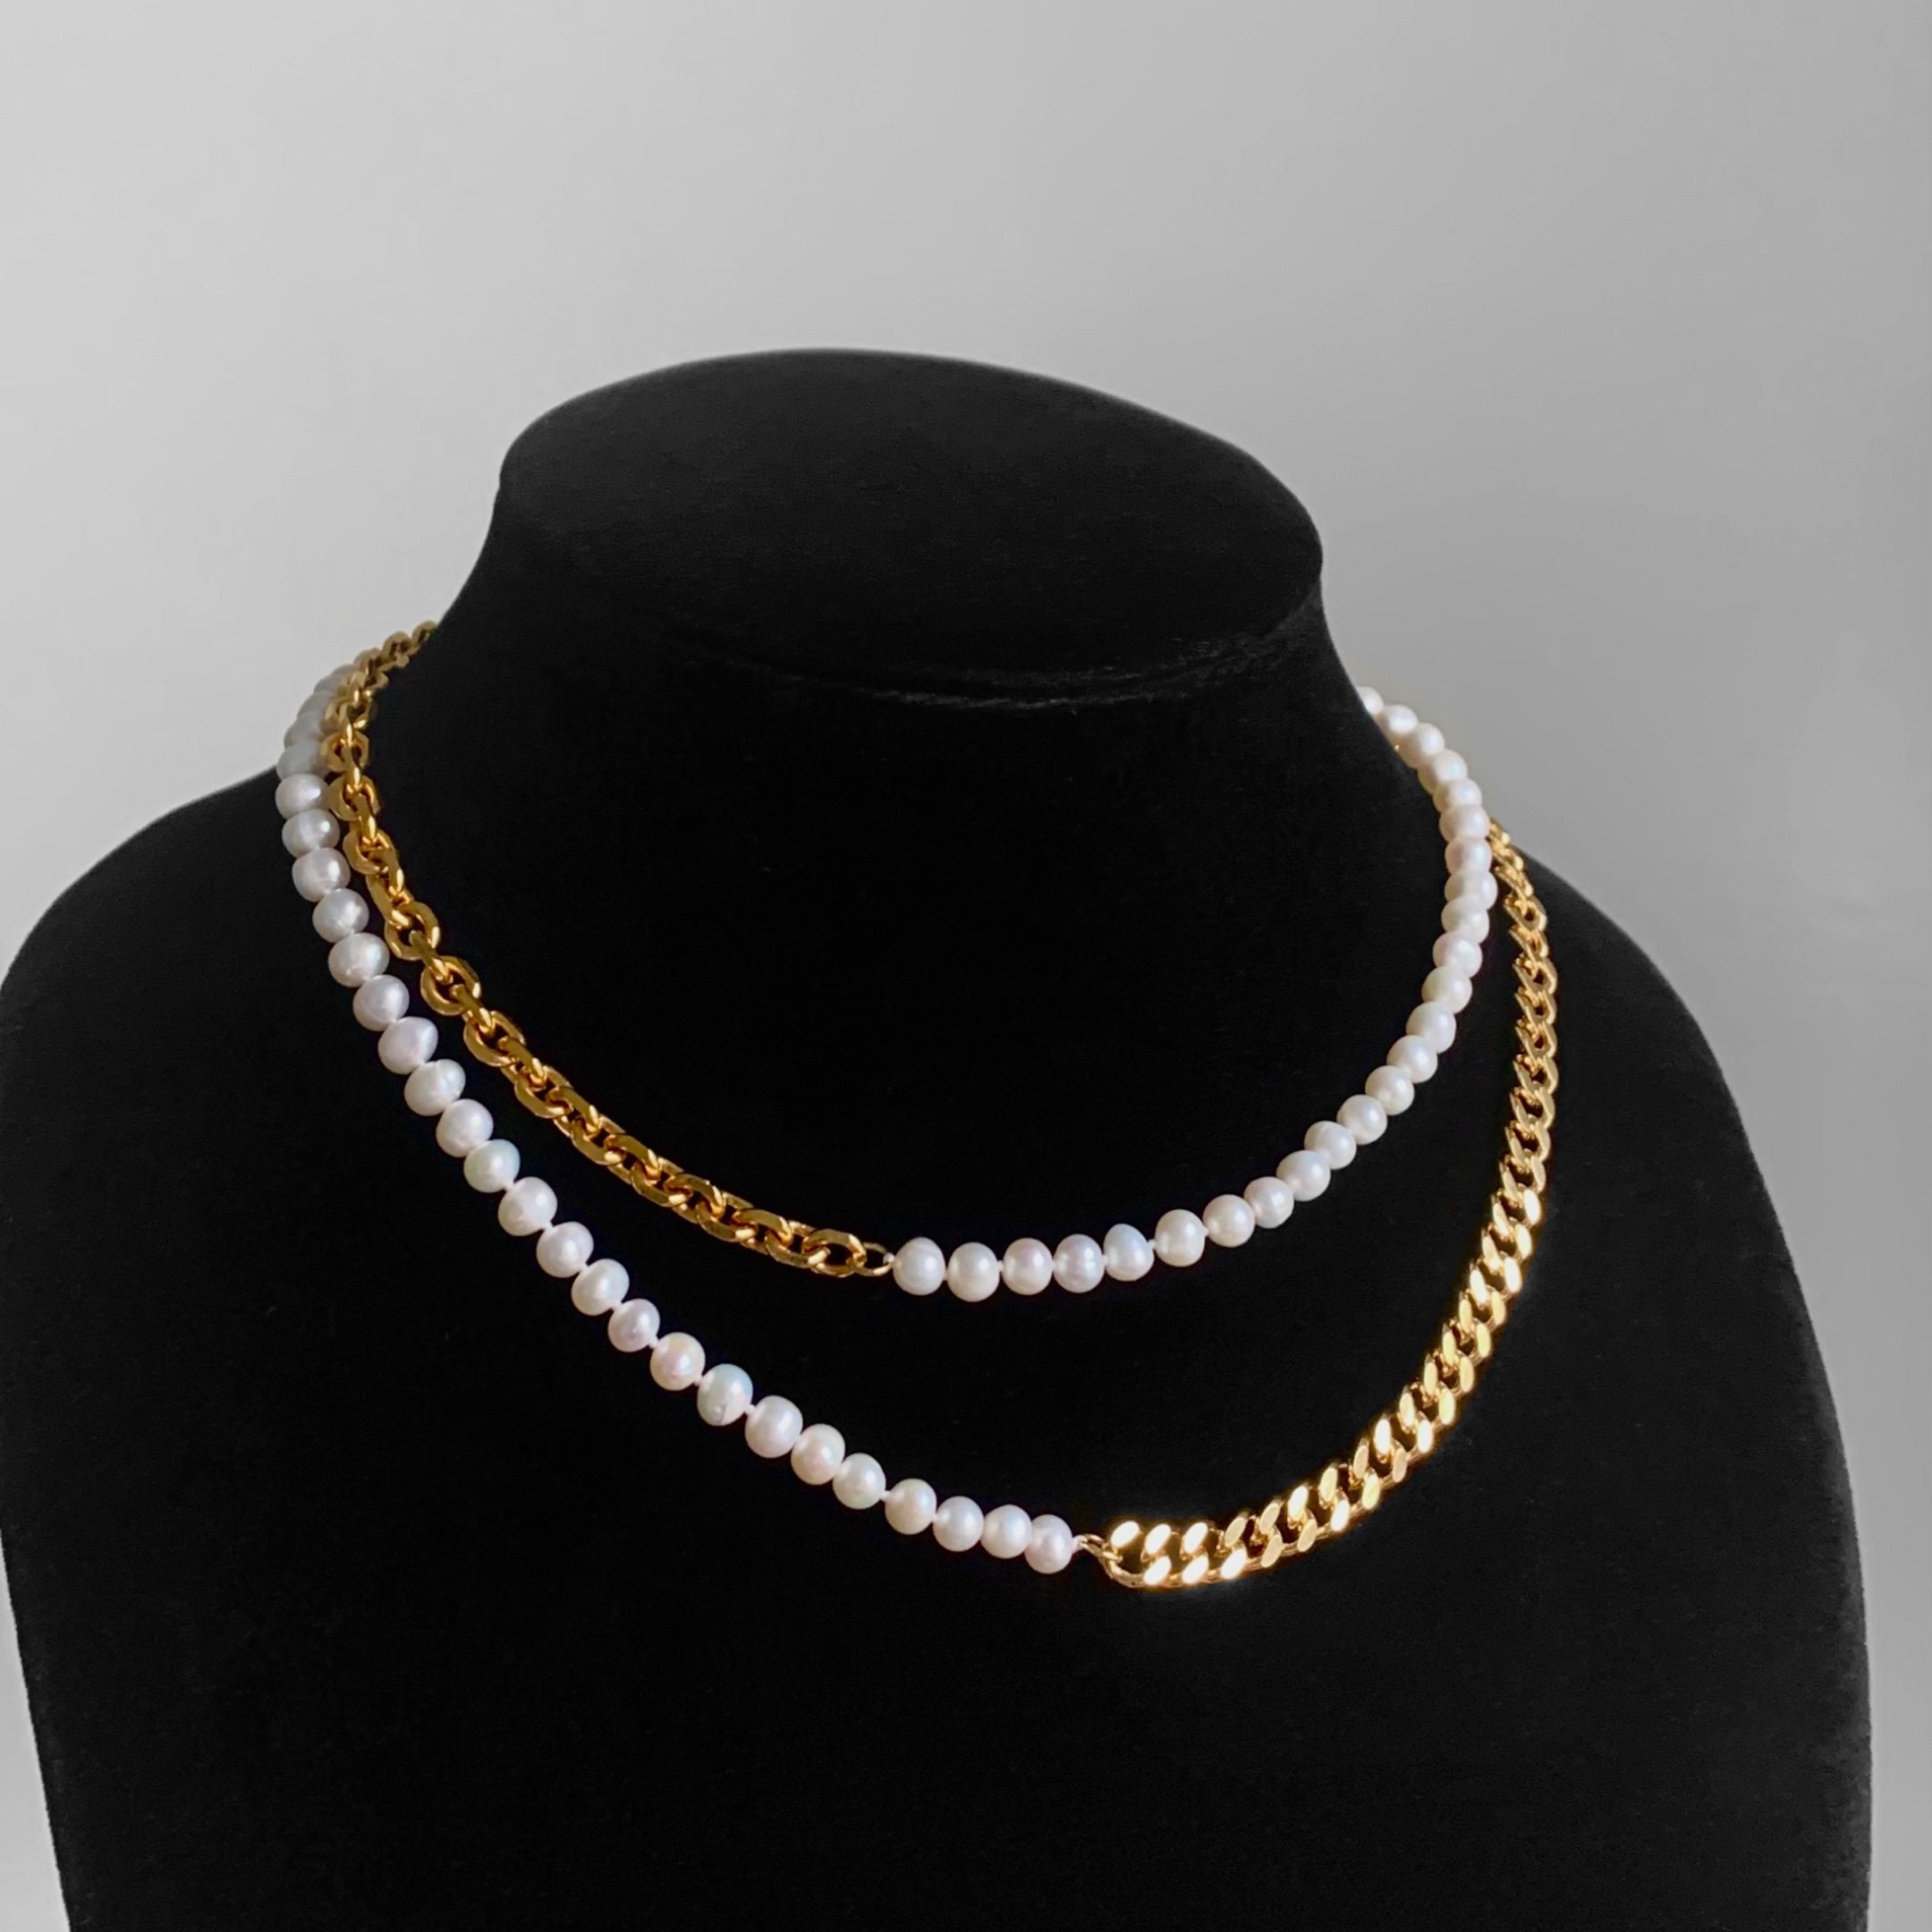 16" weiße Süßwasser Perle & Sterling Silber Cluster Halsreif Halskette